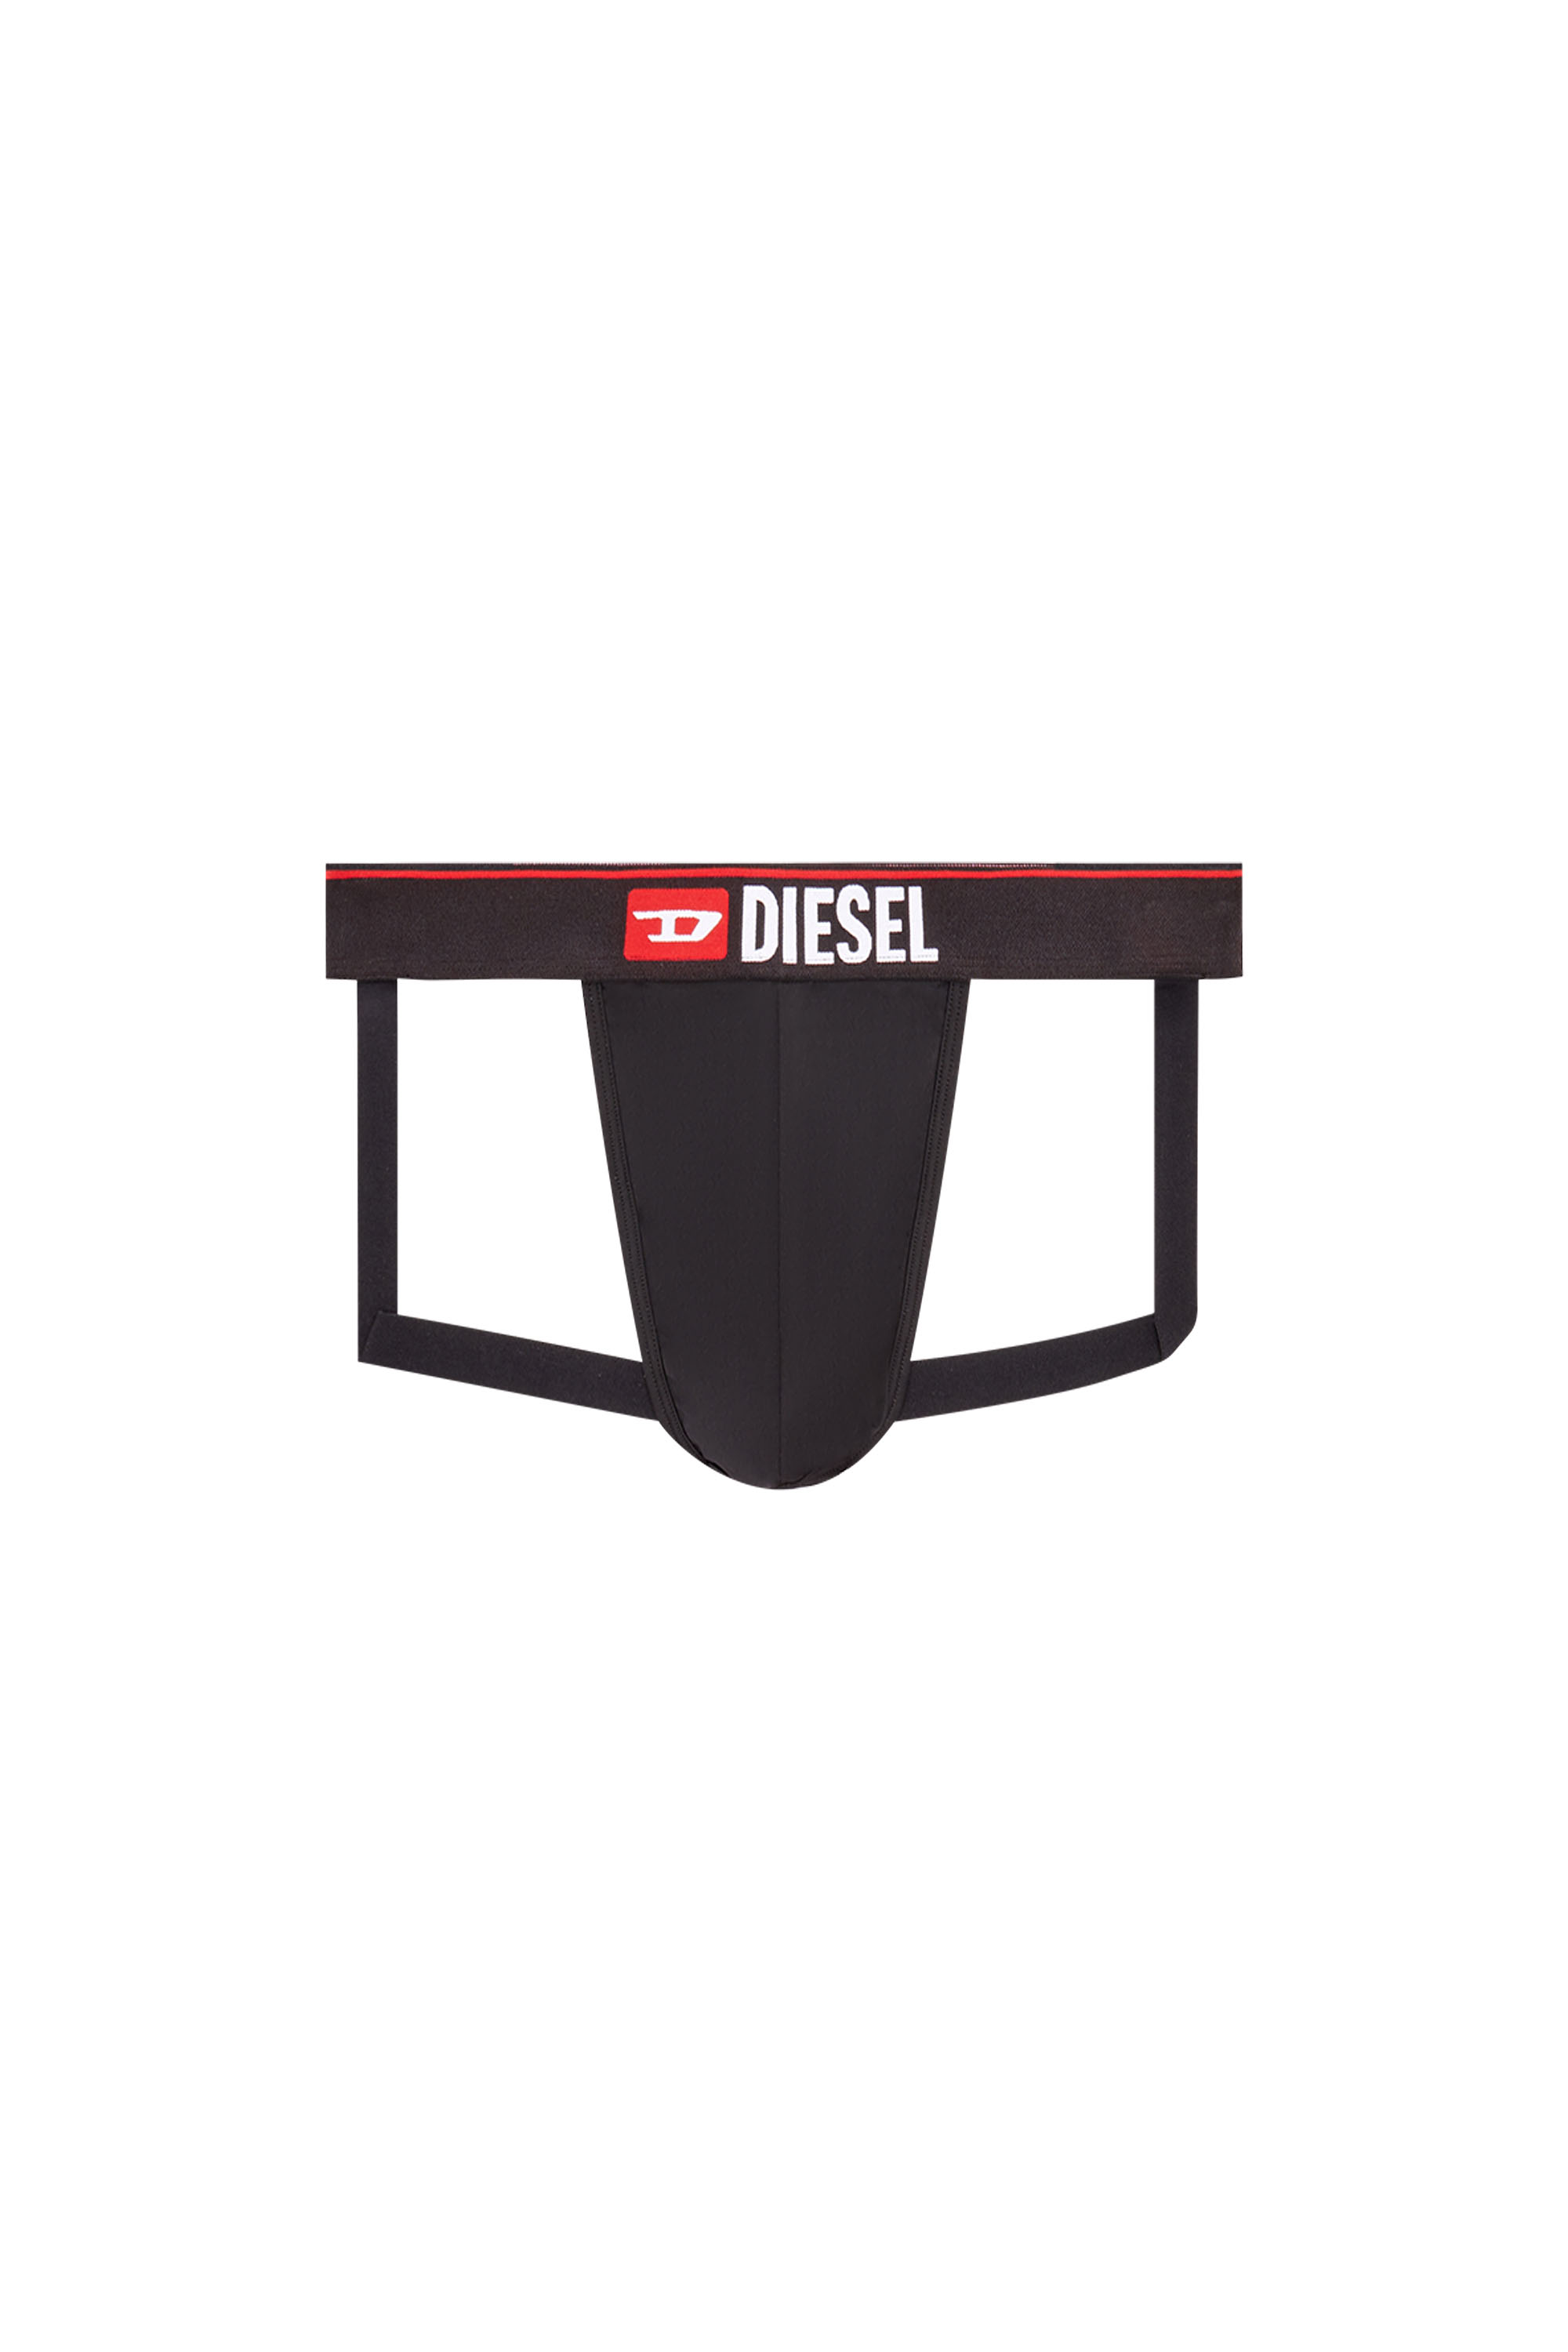 Diesel - UMBR-JOCKY, Black - Image 2